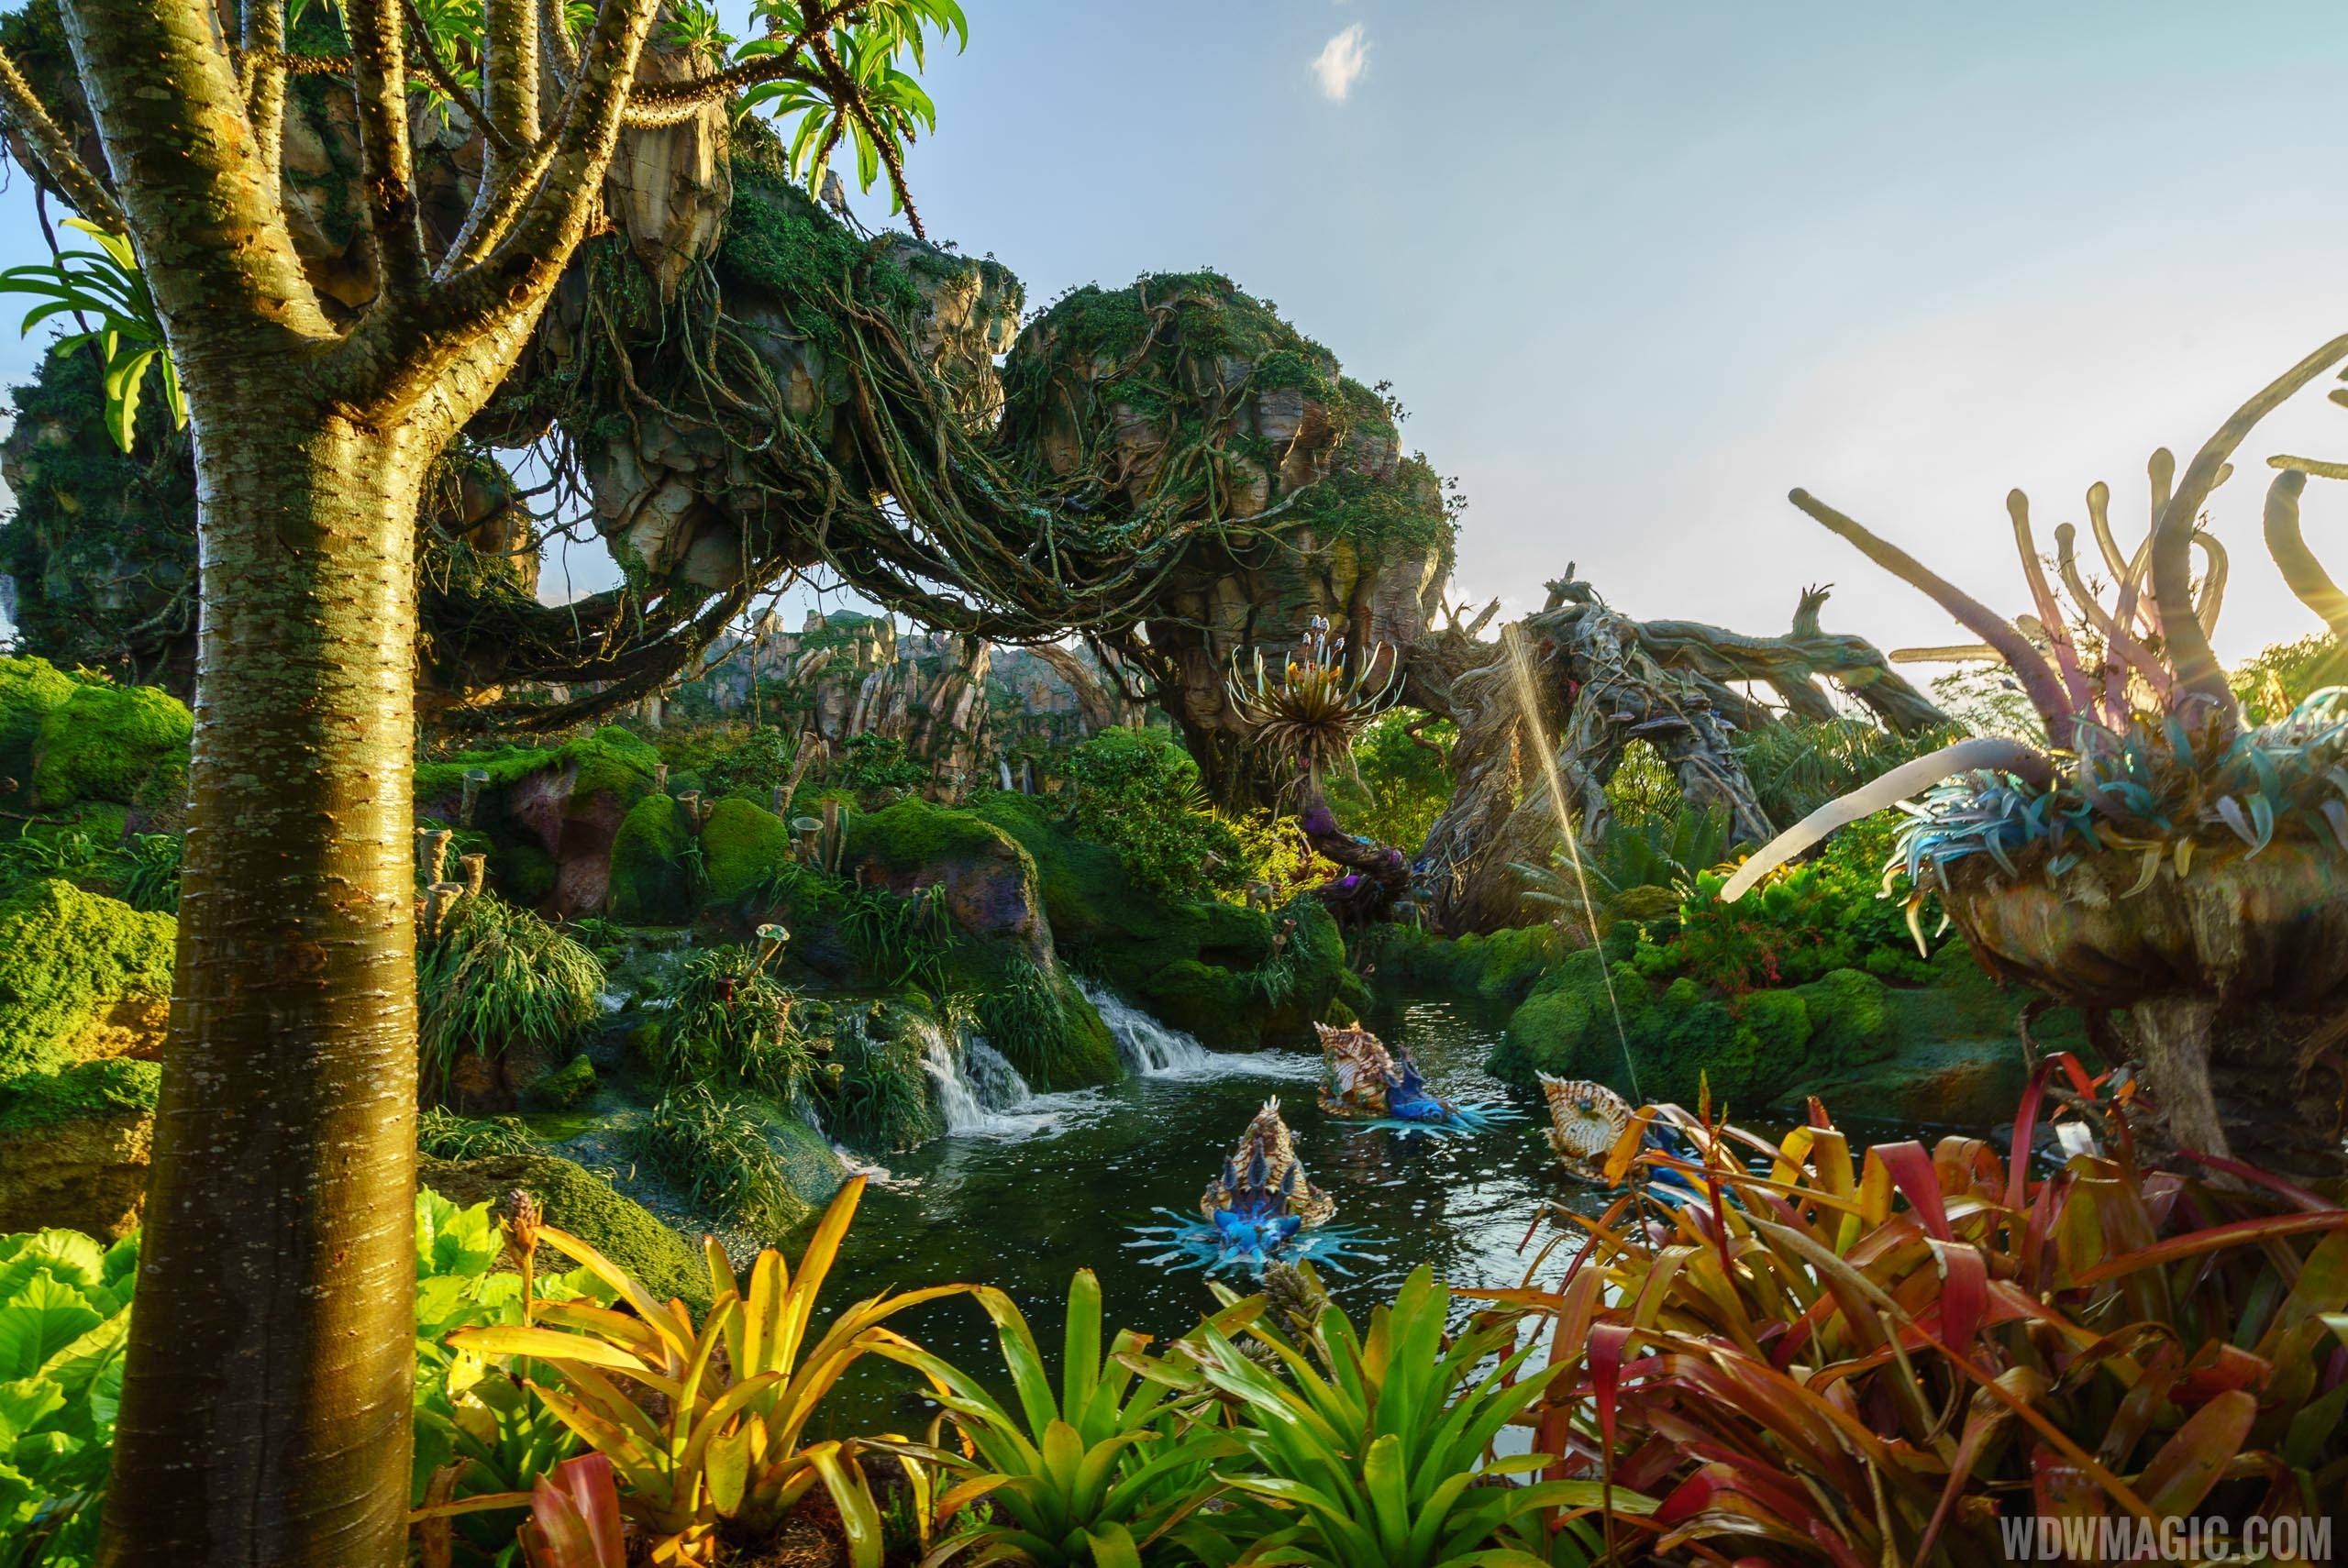 The new area Pandora The World of AVATAR of Disneys newly opened movie  Avatar is like this  GIGAZINE